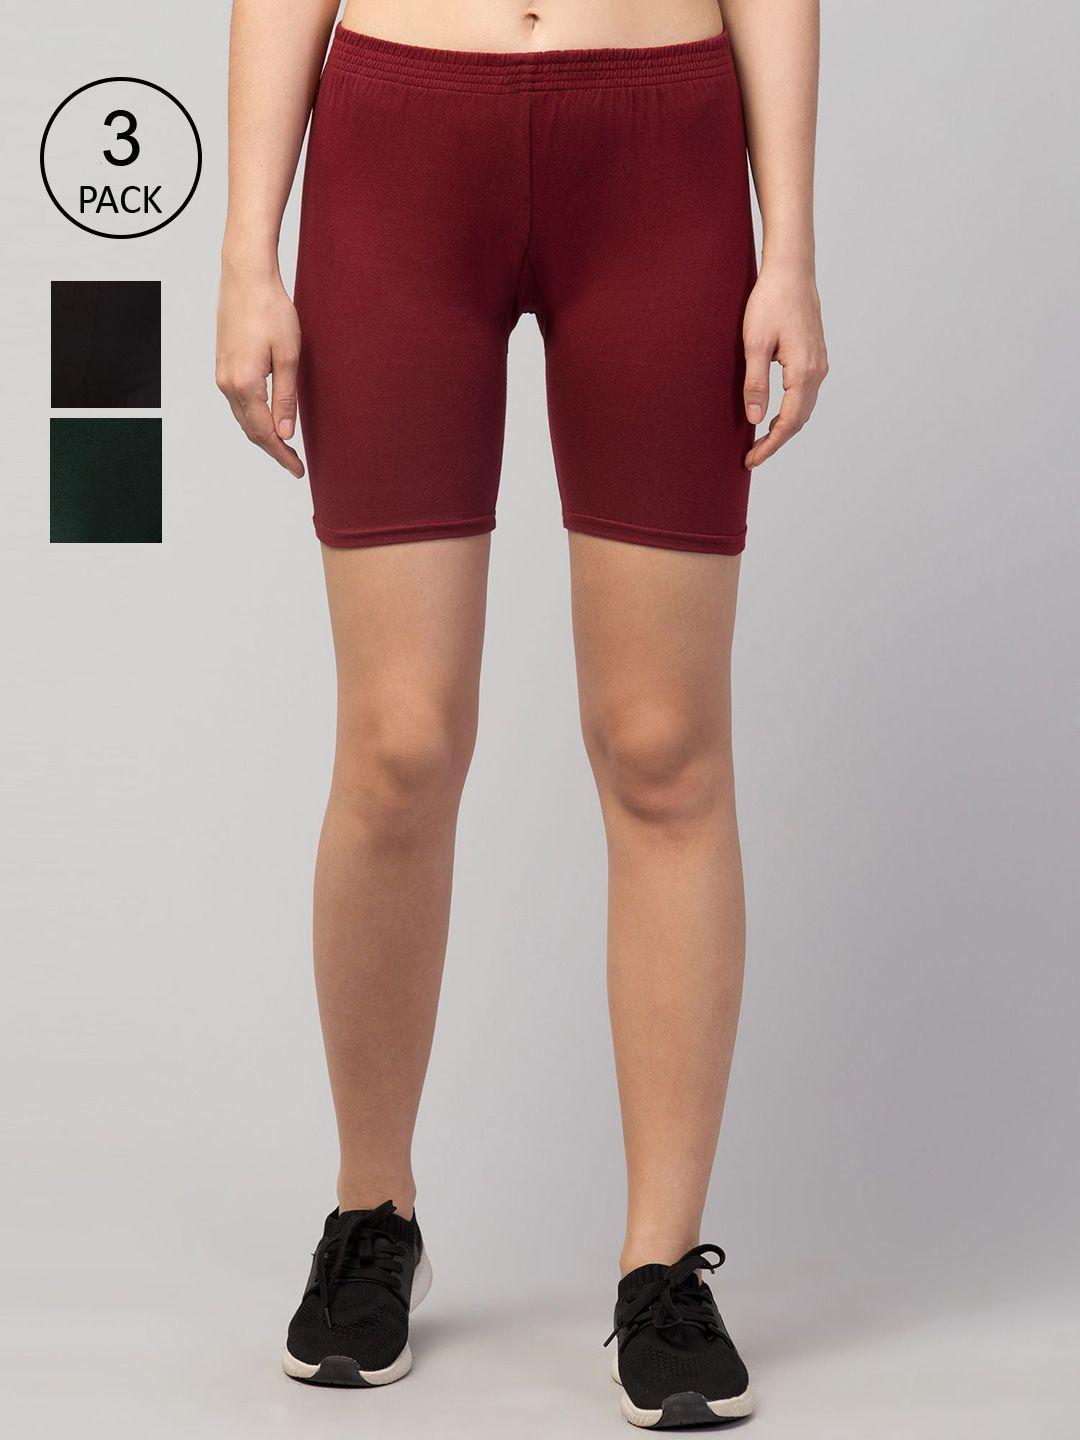 apraa & parma women maroon & black set of 3 slim fit pure cotton cycling sports shorts